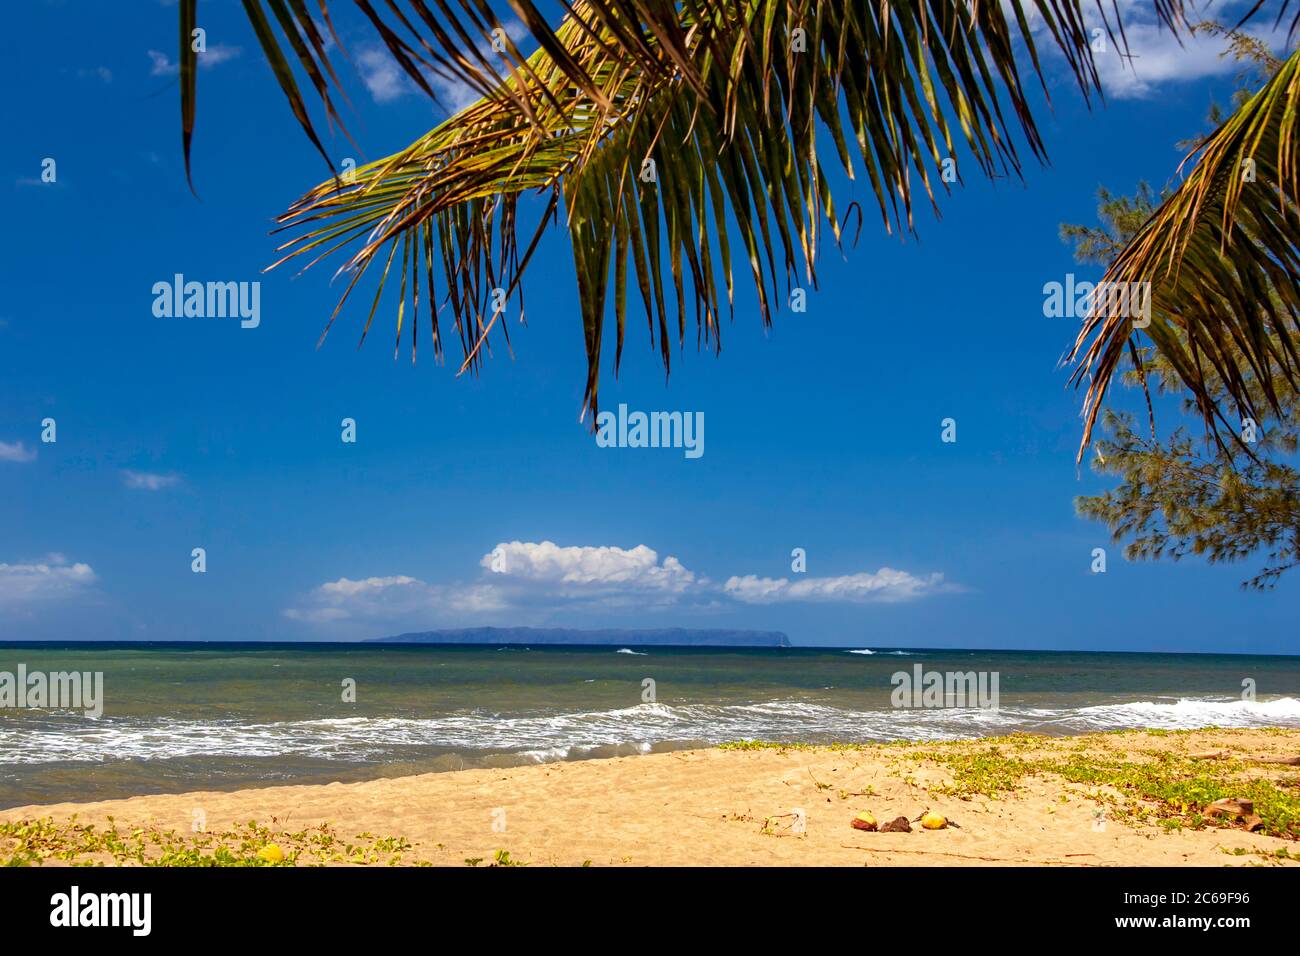 Palmen und Strand auf Kauai umrahmen die Insel Niihau am Horizont, Hawaii. Stockfoto